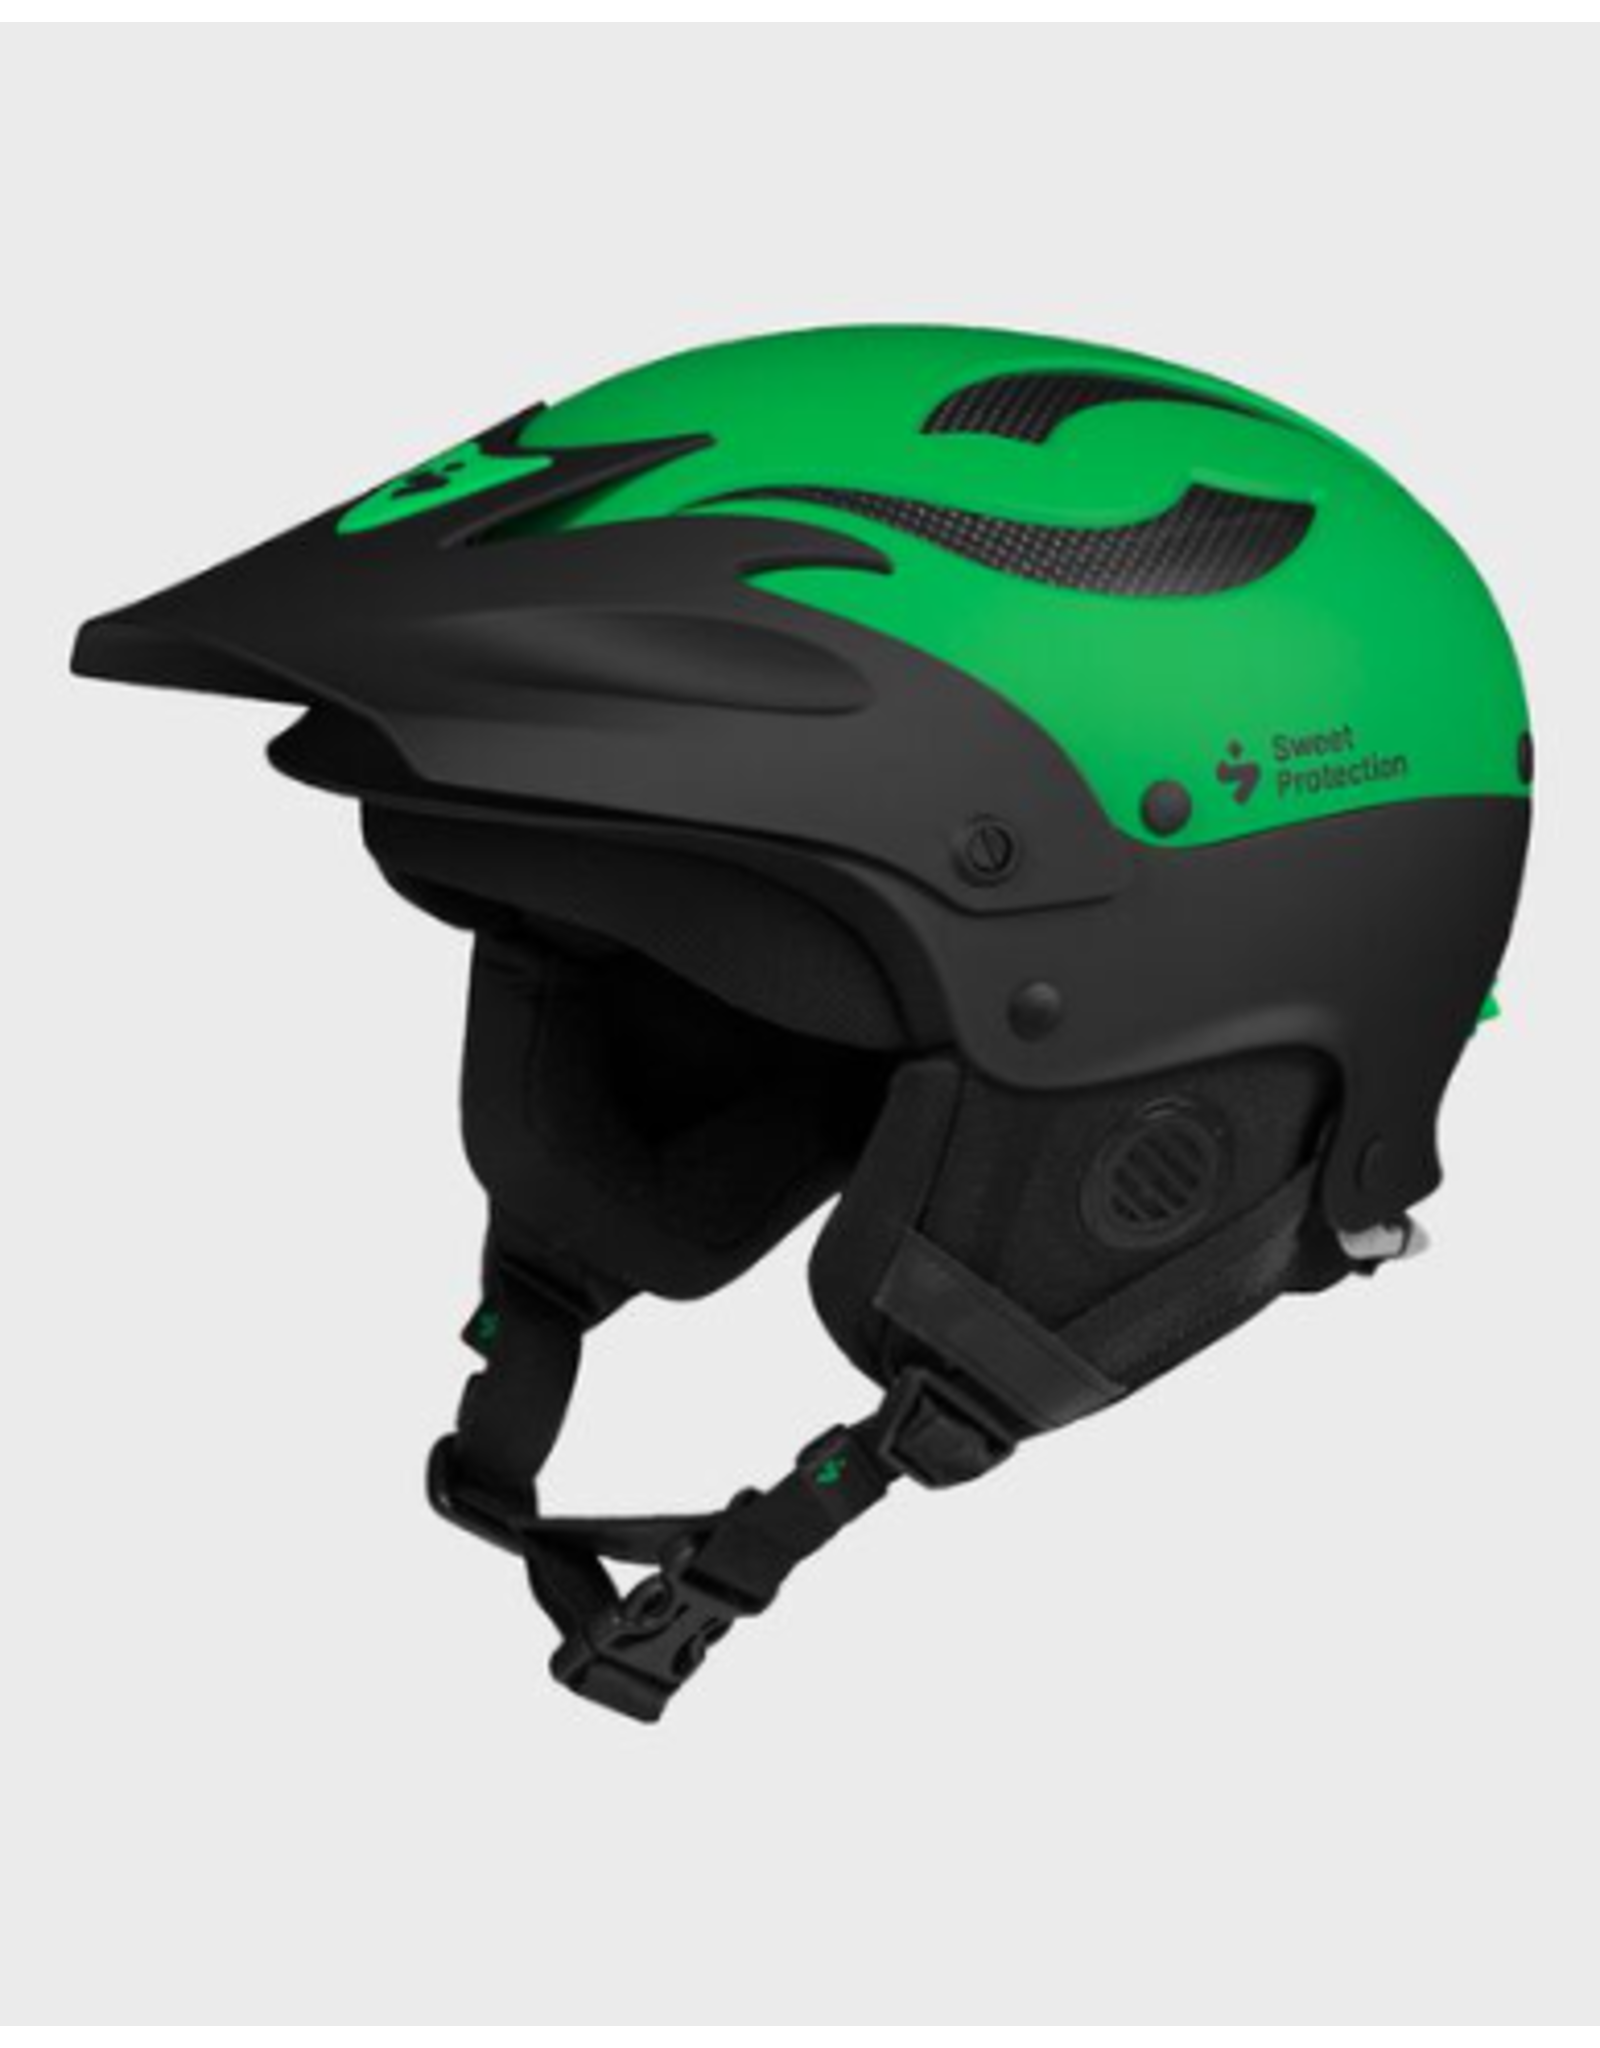 Sweet Protection Sweet Protection Acc. Rocker Helmet